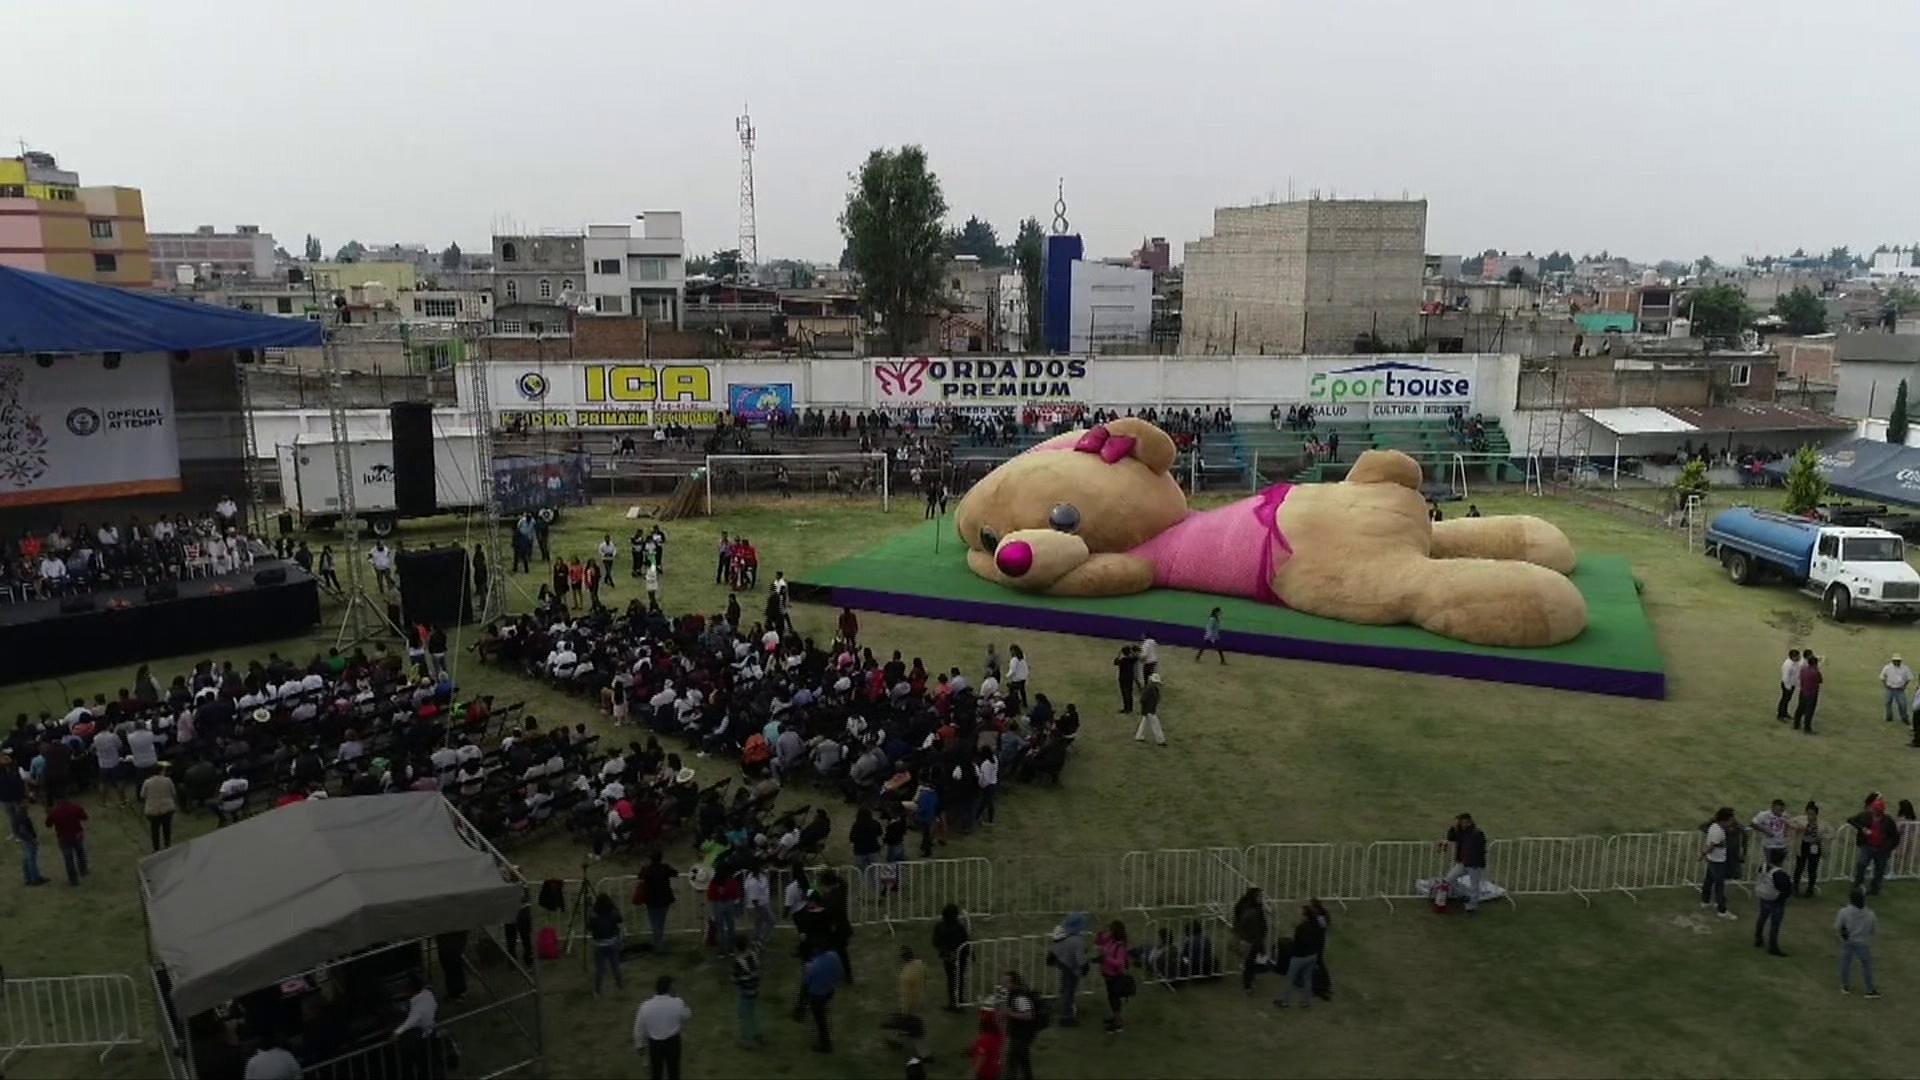 biggest stuffed animal